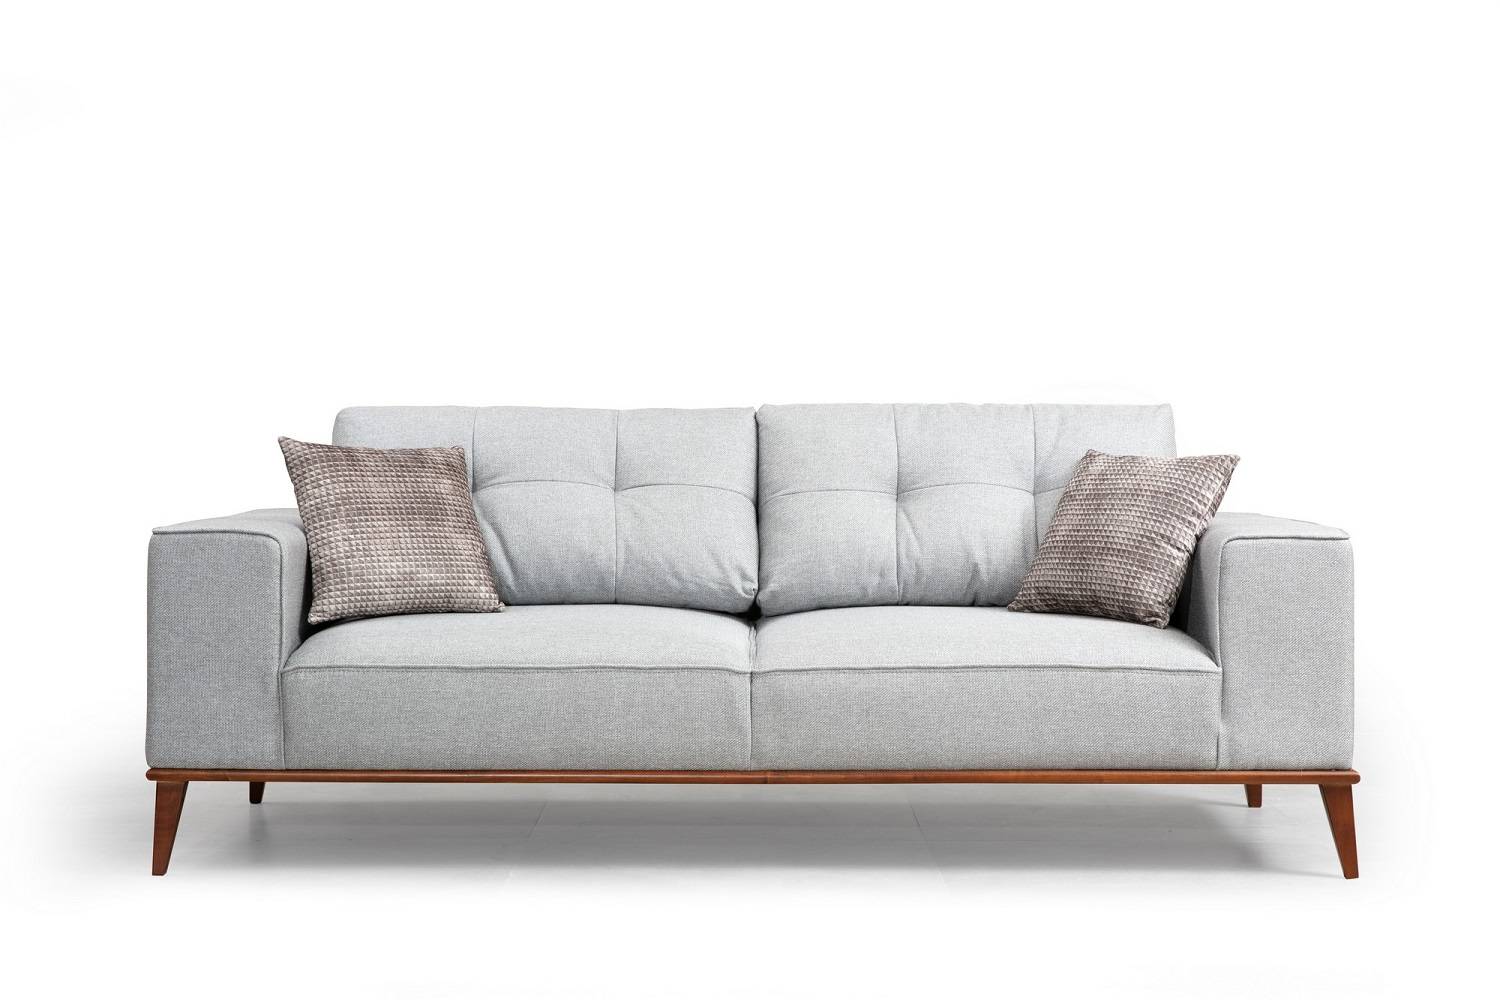 Sofahouse Designová 3-místná sedačka Tarika 223 cm světle šedá